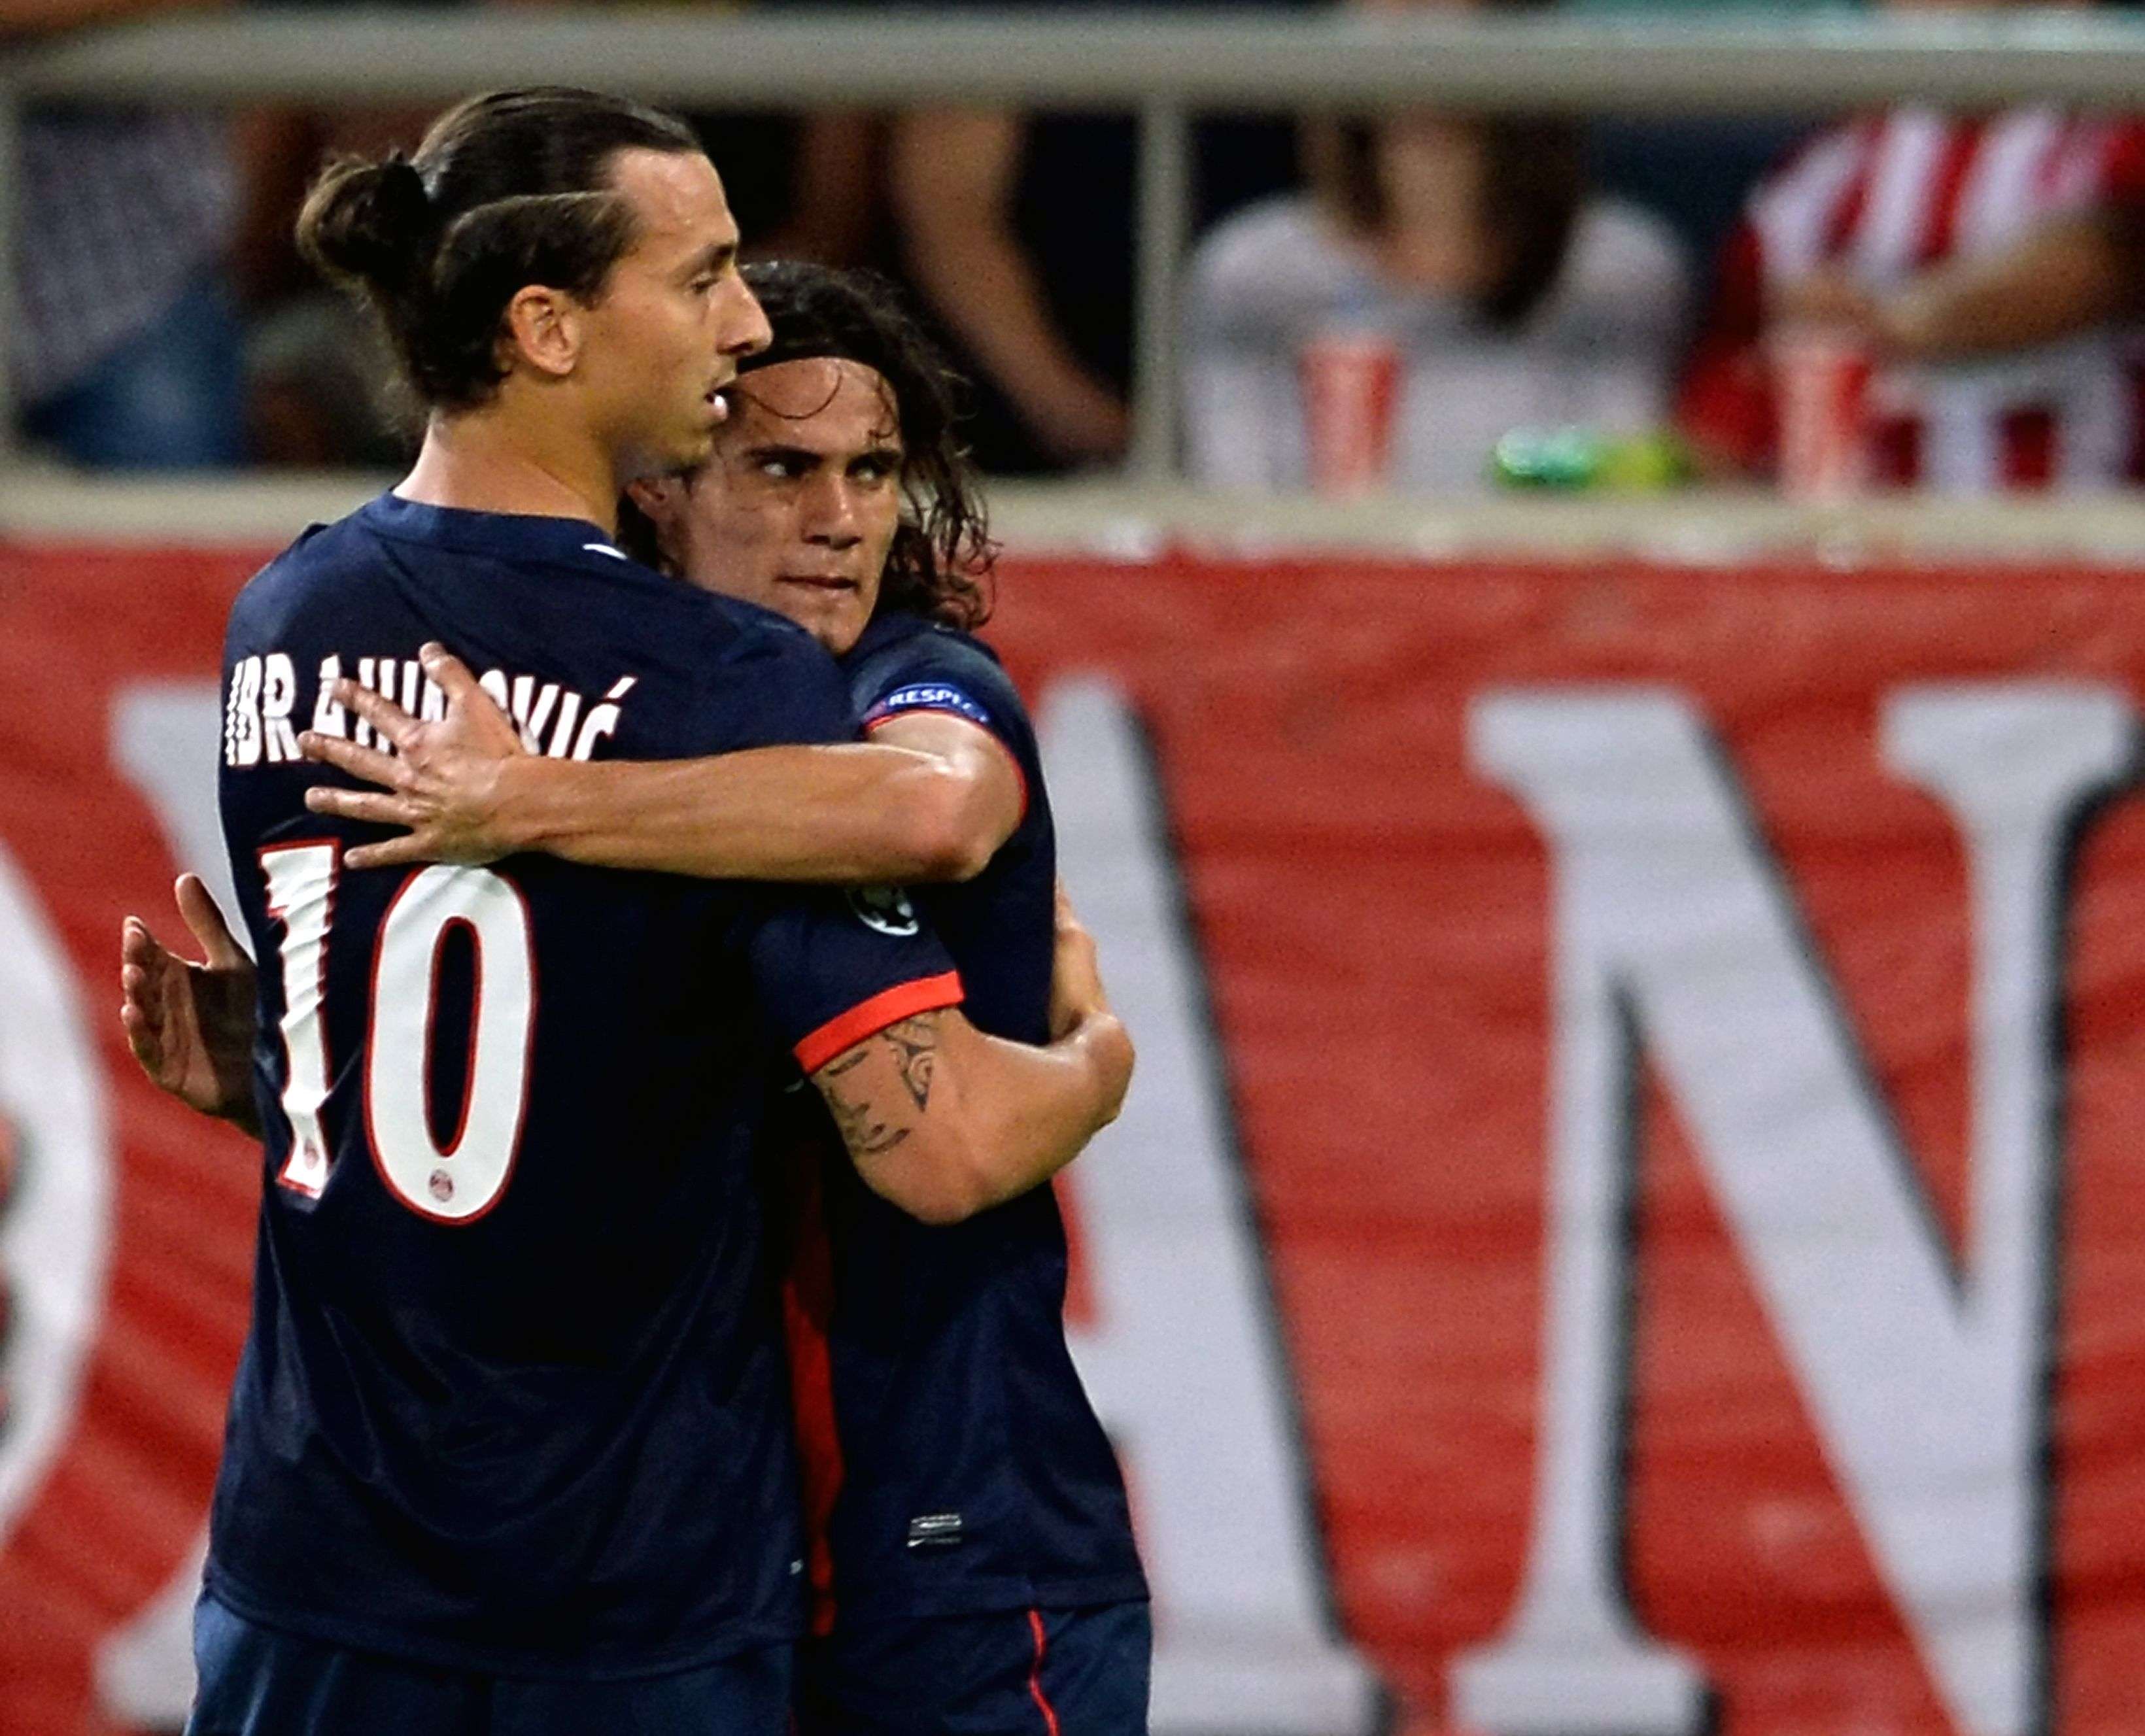 Paris Saint-Germain strikers Zlatan Ibrahimovic and Edinson Cavani